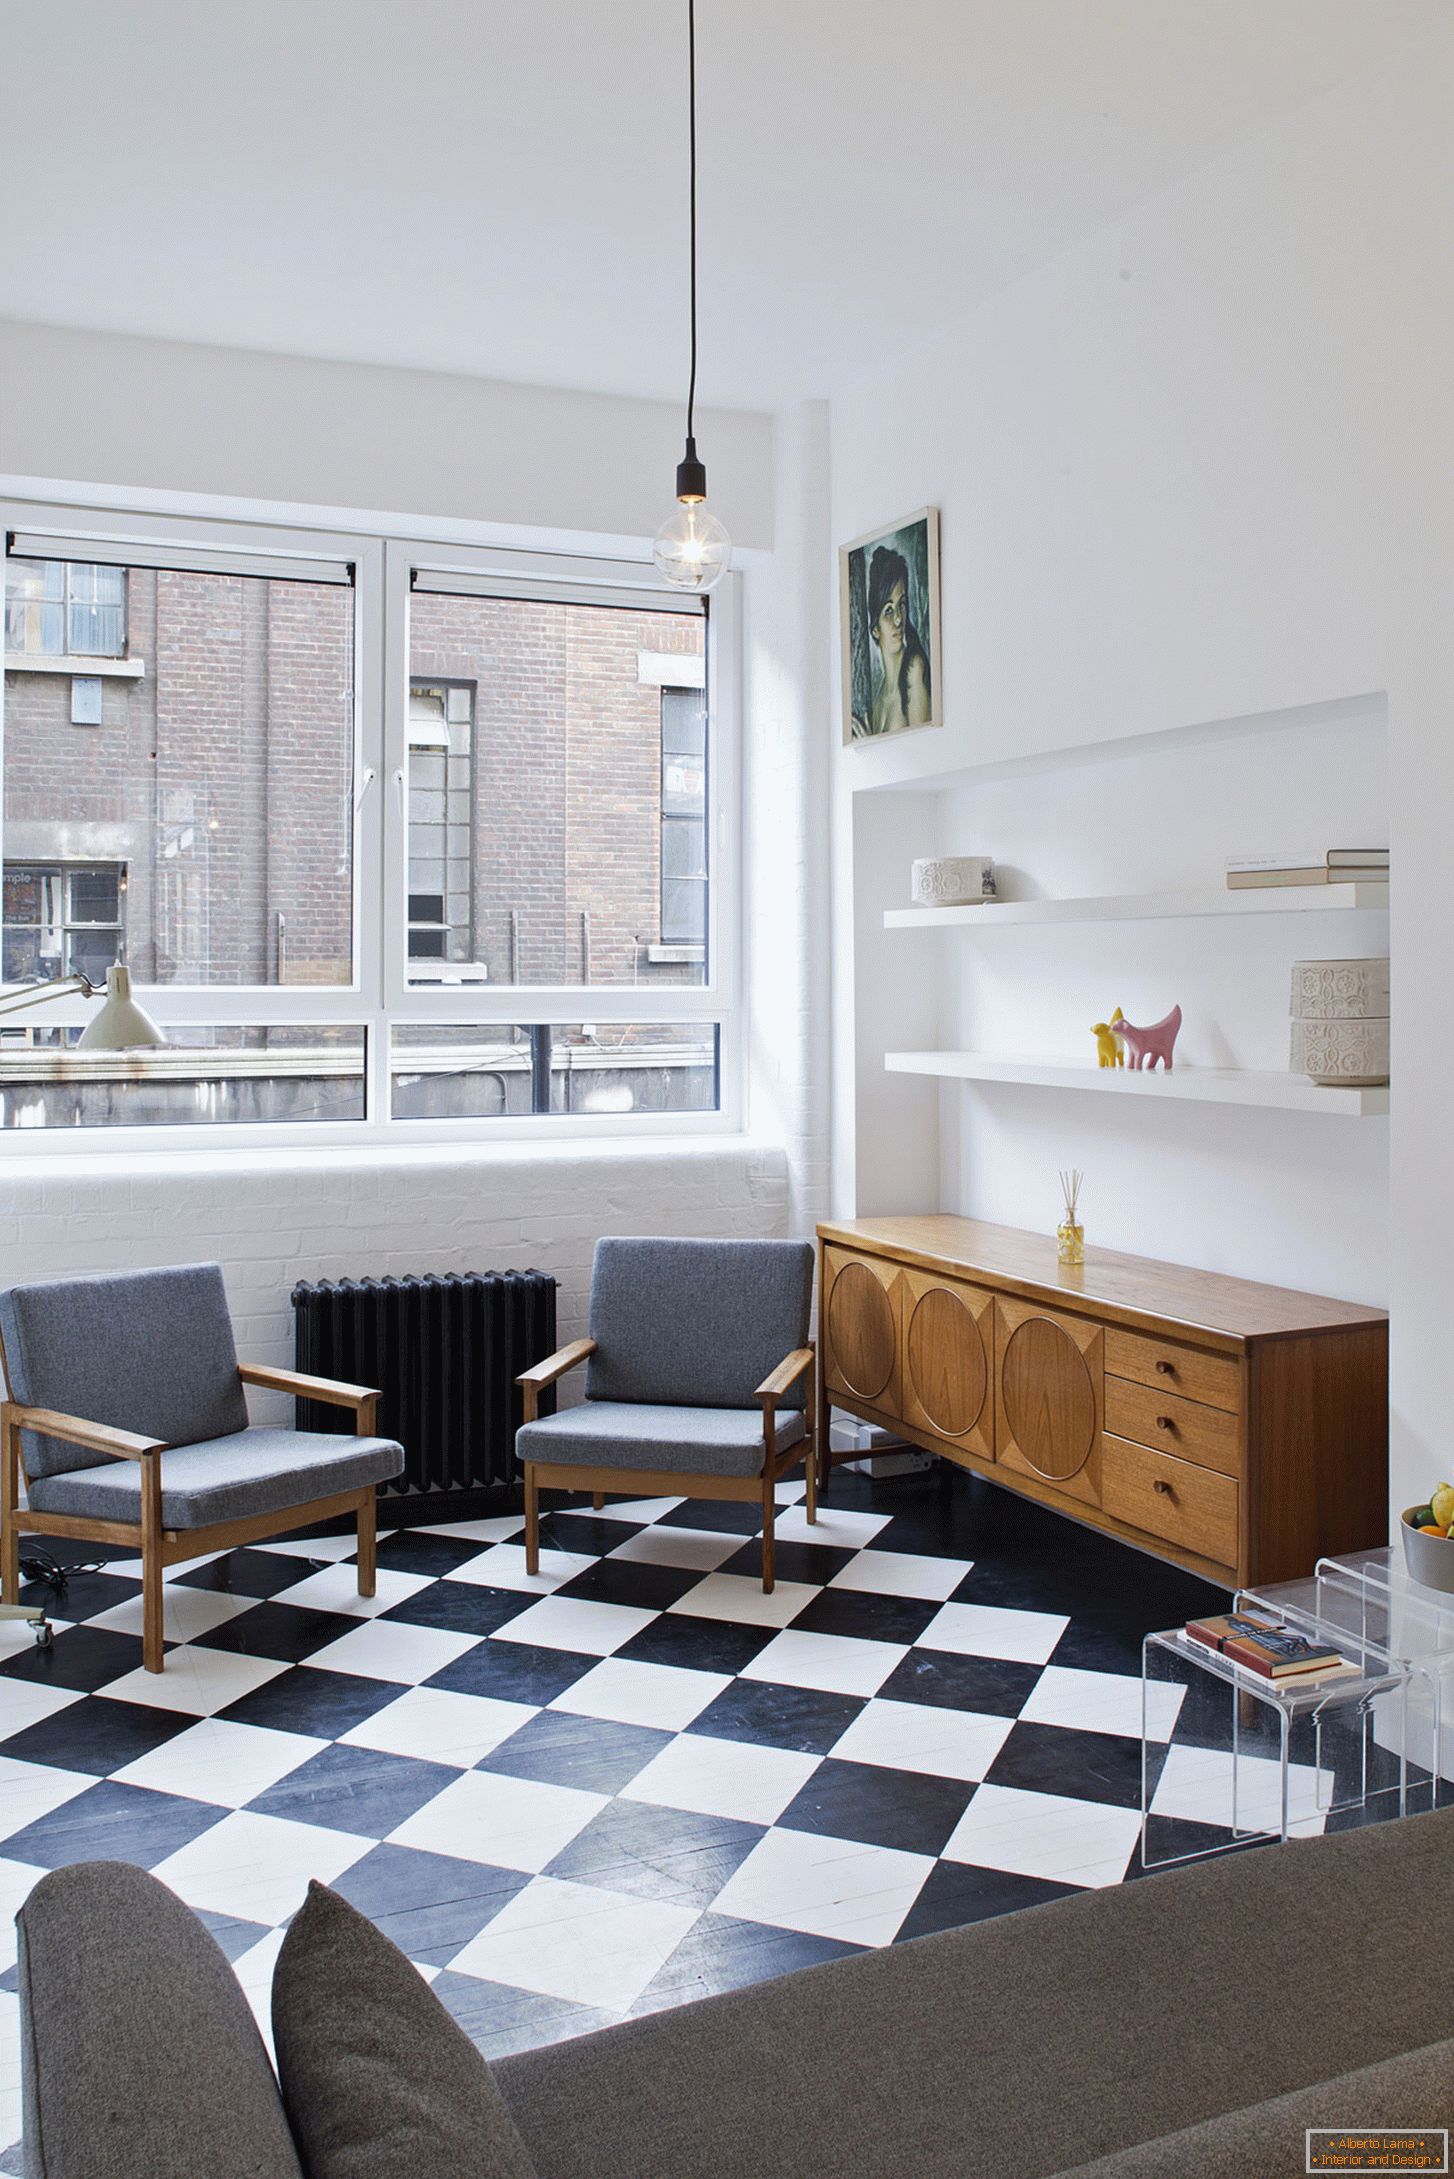 City View House - Bäckerei, in ein Studio-Apartment umgewandelt, London, UK